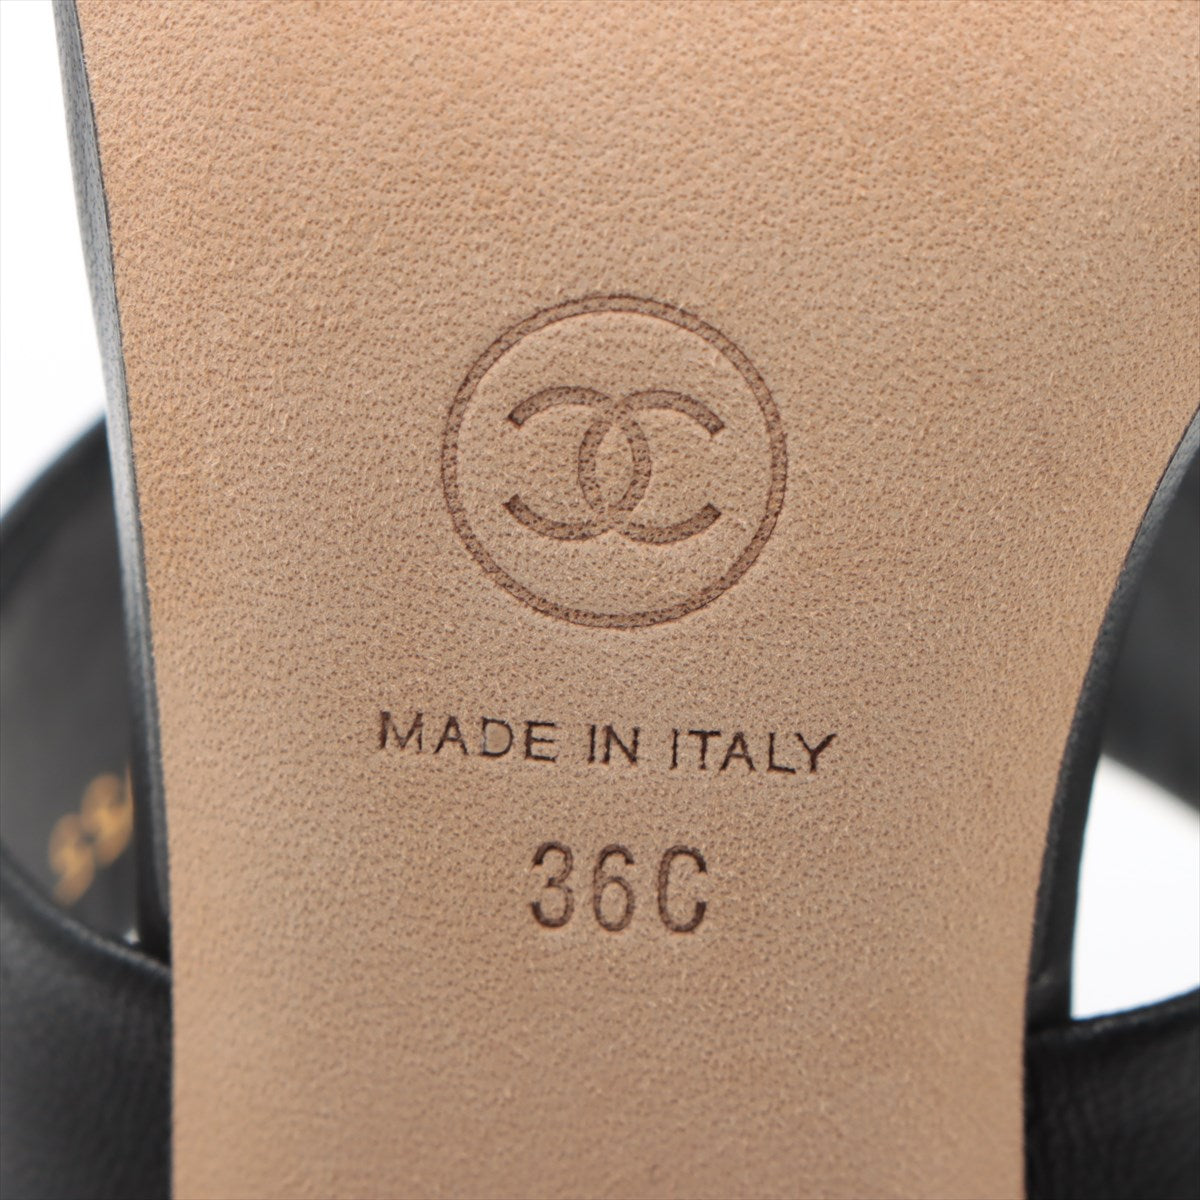 Chanel Coco Leather Sandal 36C  Black G32755  Pearl Box  Bag